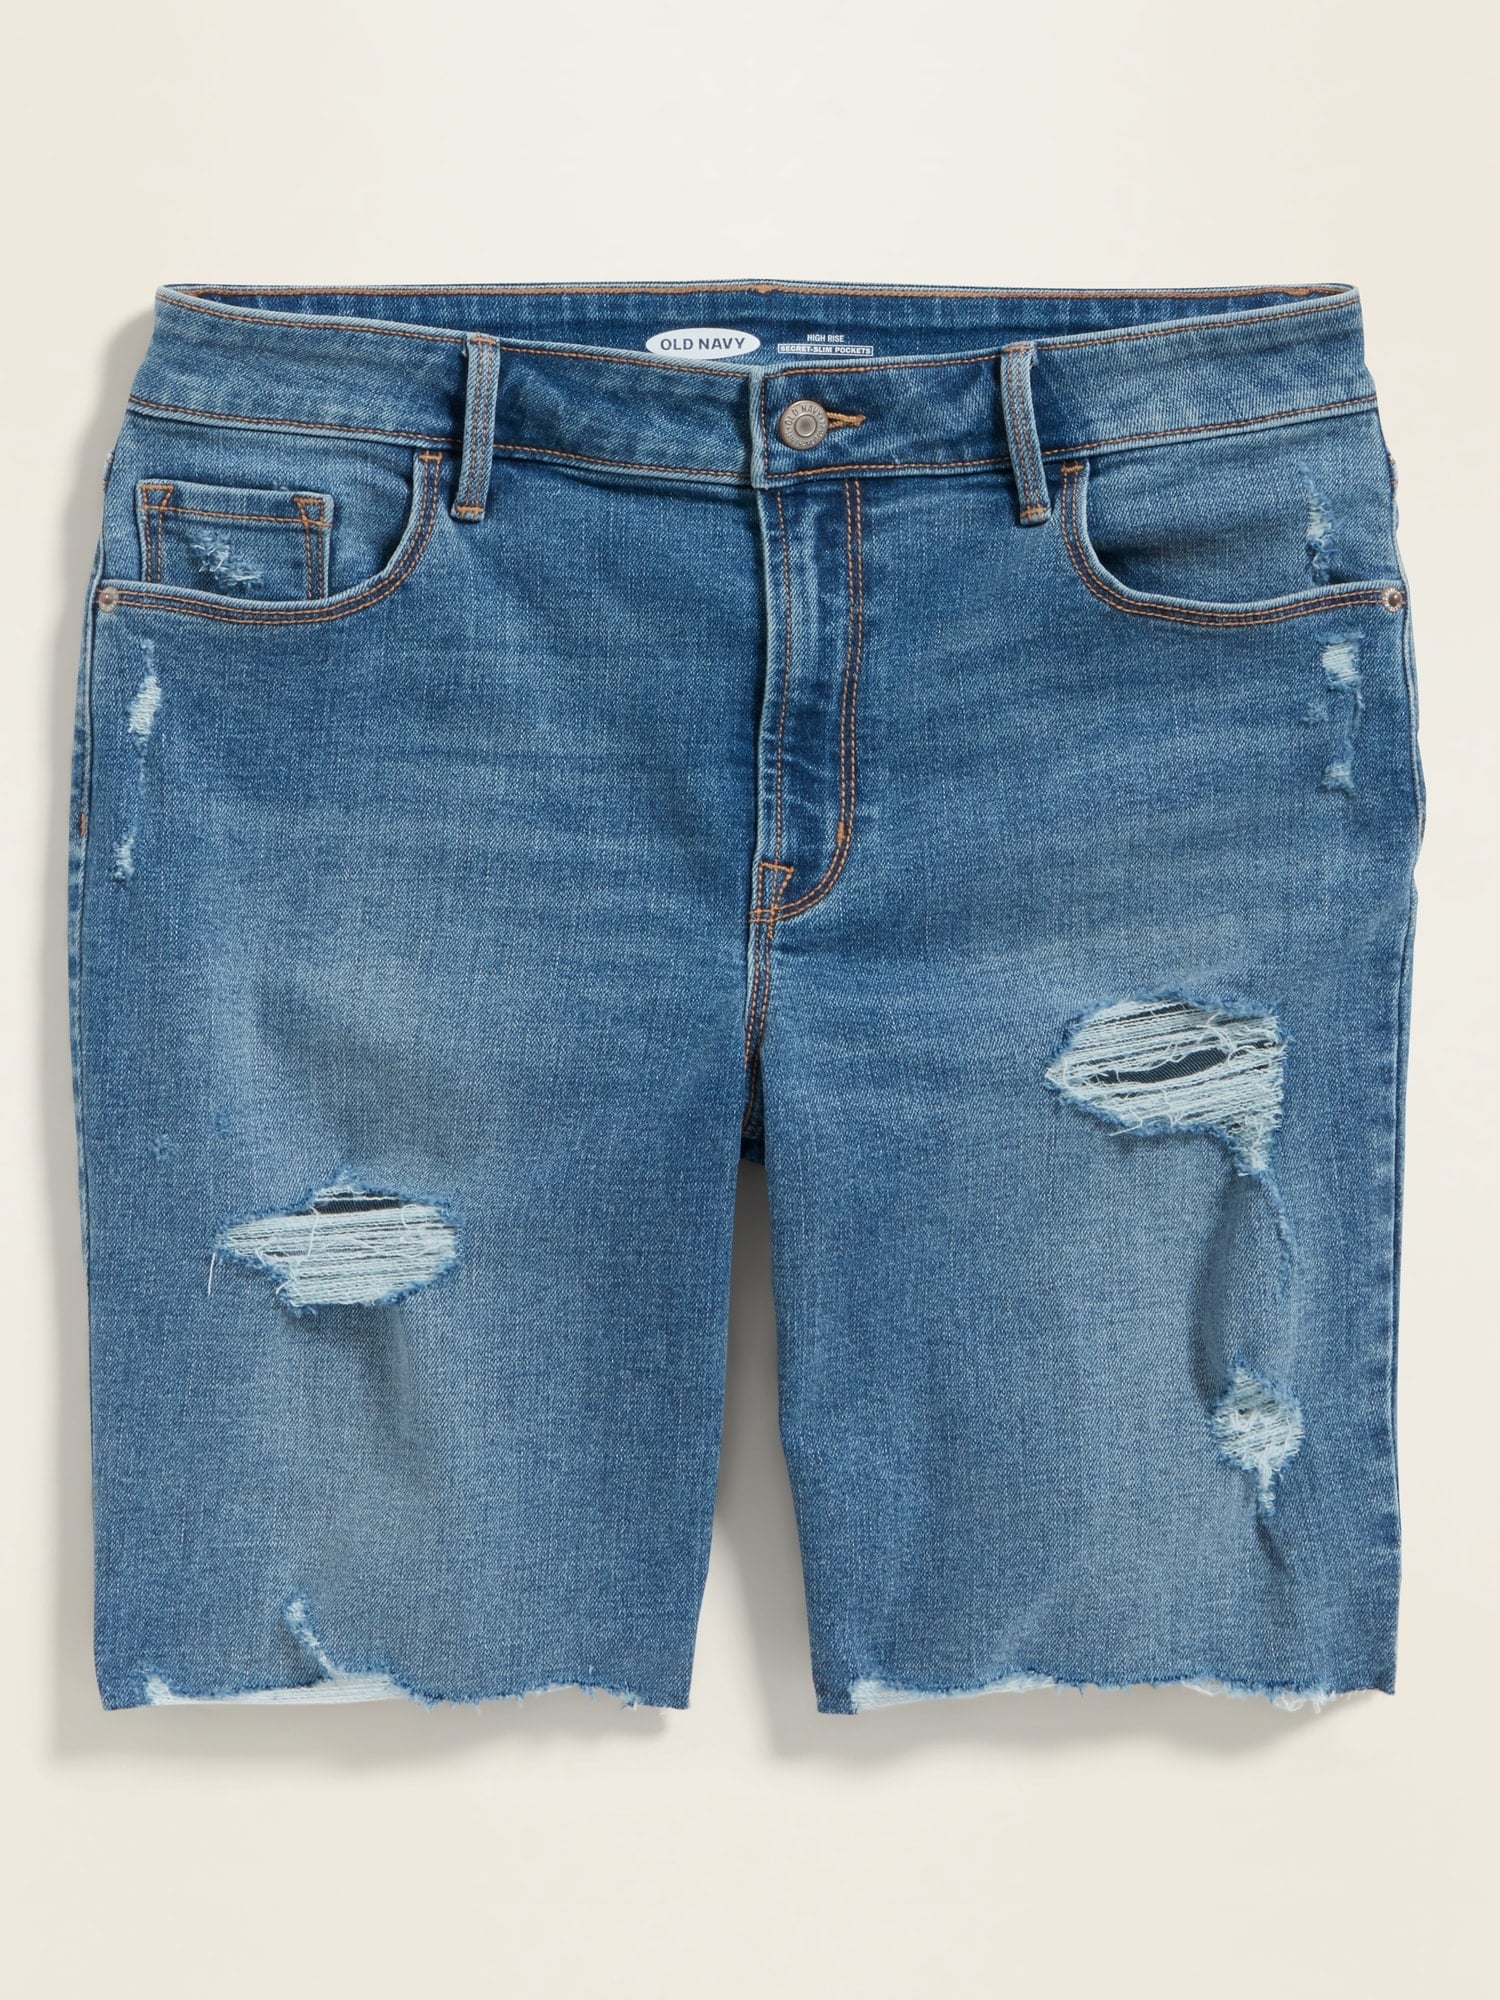 ripped bermuda jean shorts